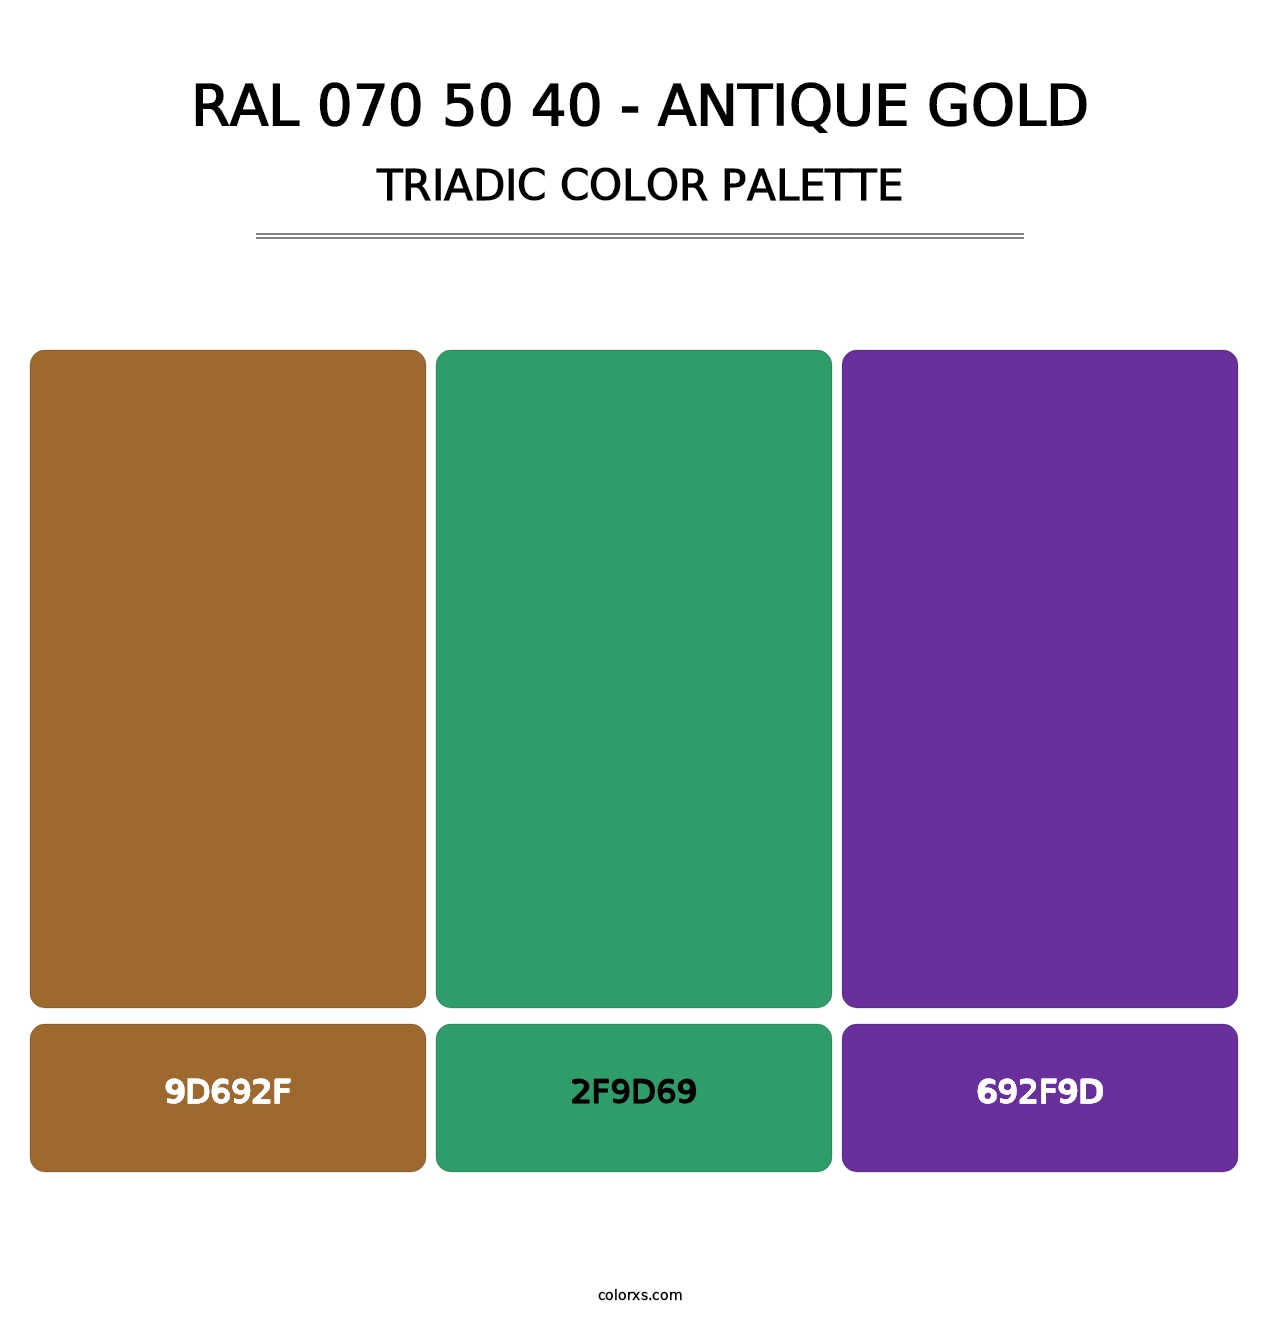 RAL 070 50 40 - Antique Gold - Triadic Color Palette